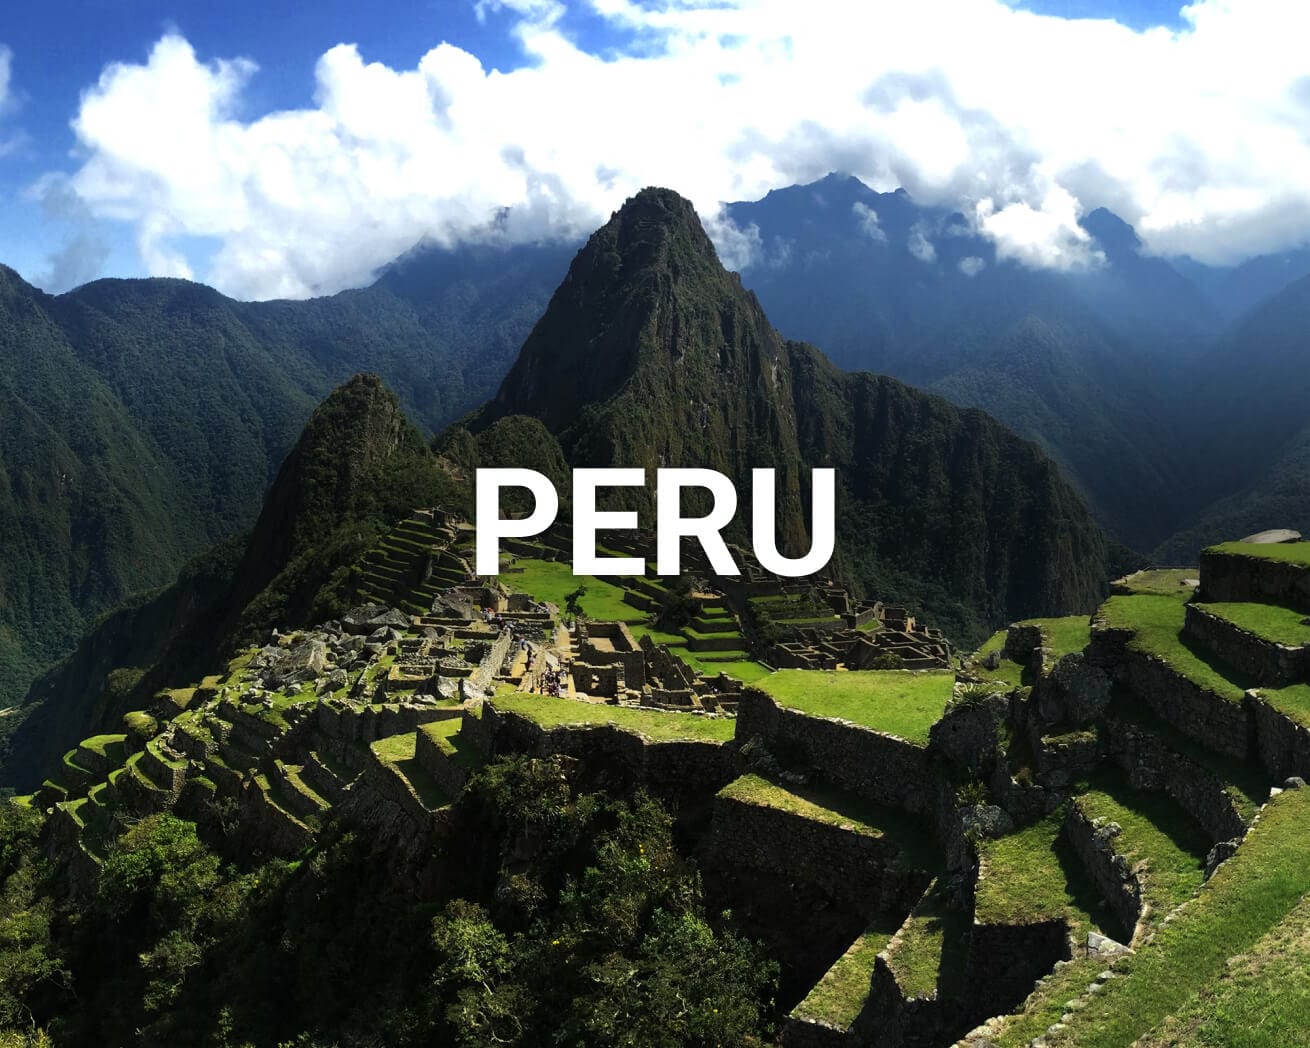 Peru mountainous landscape